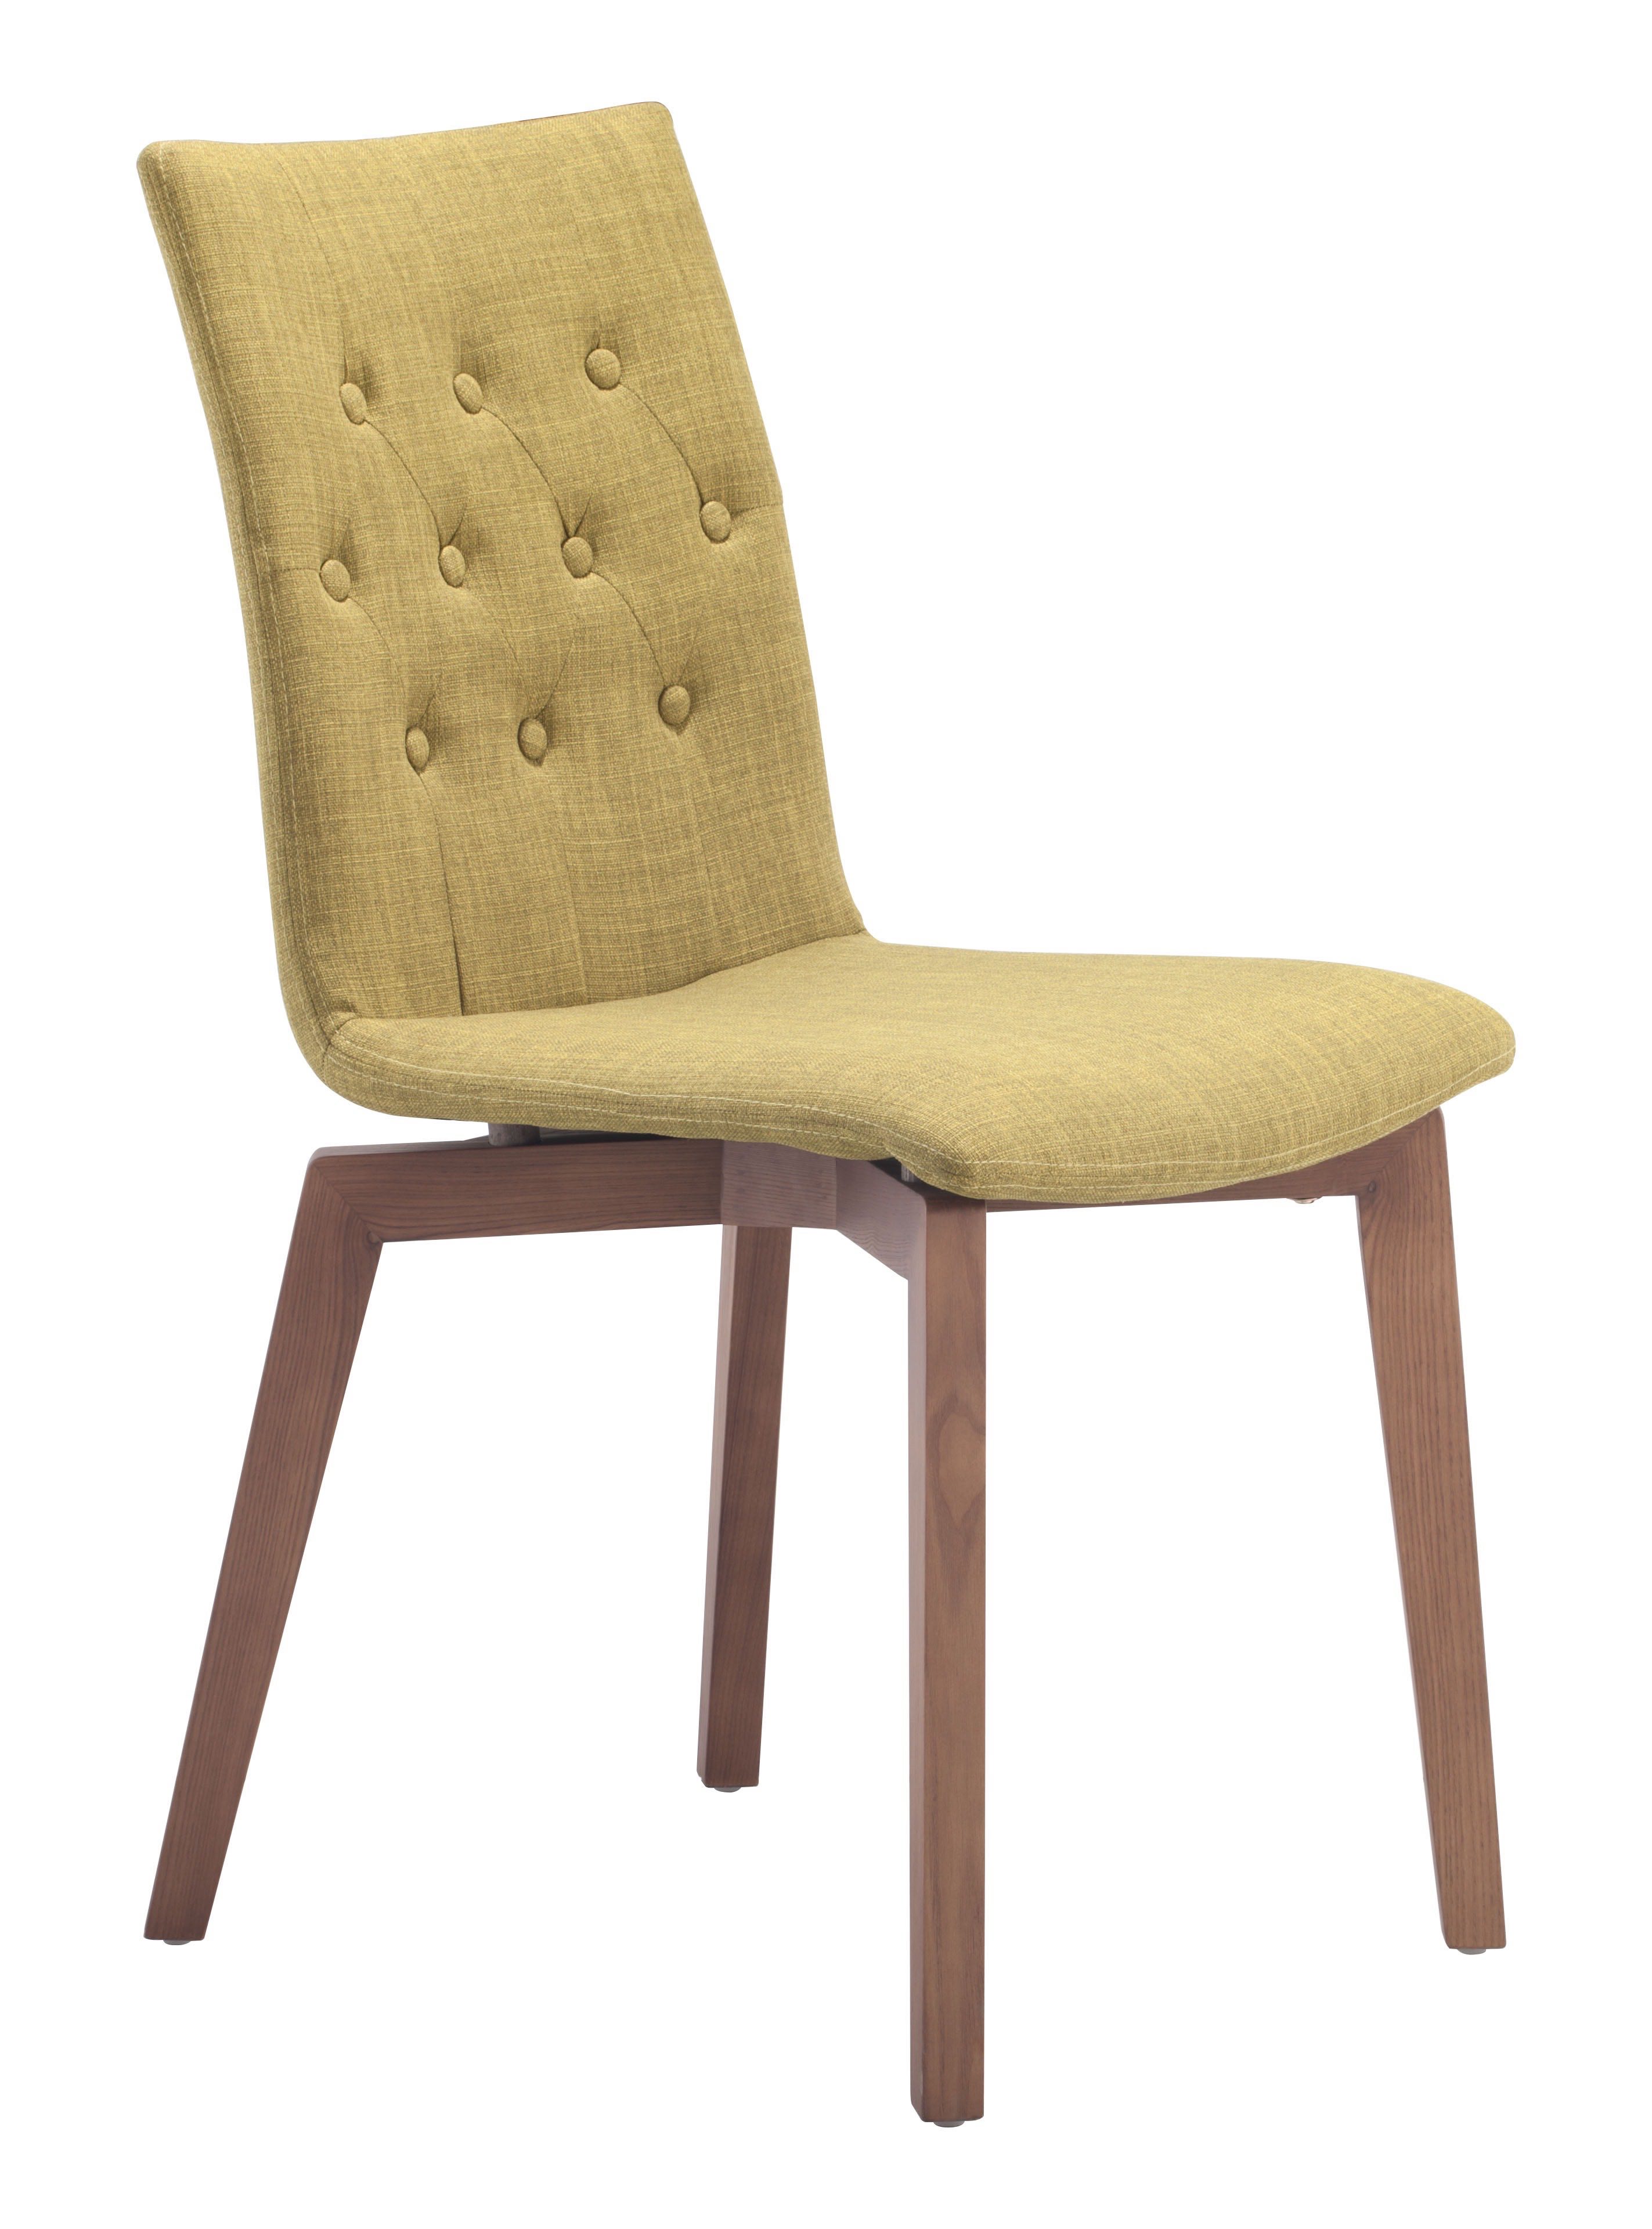 Zuo-Modern-Orebro-dining-chair